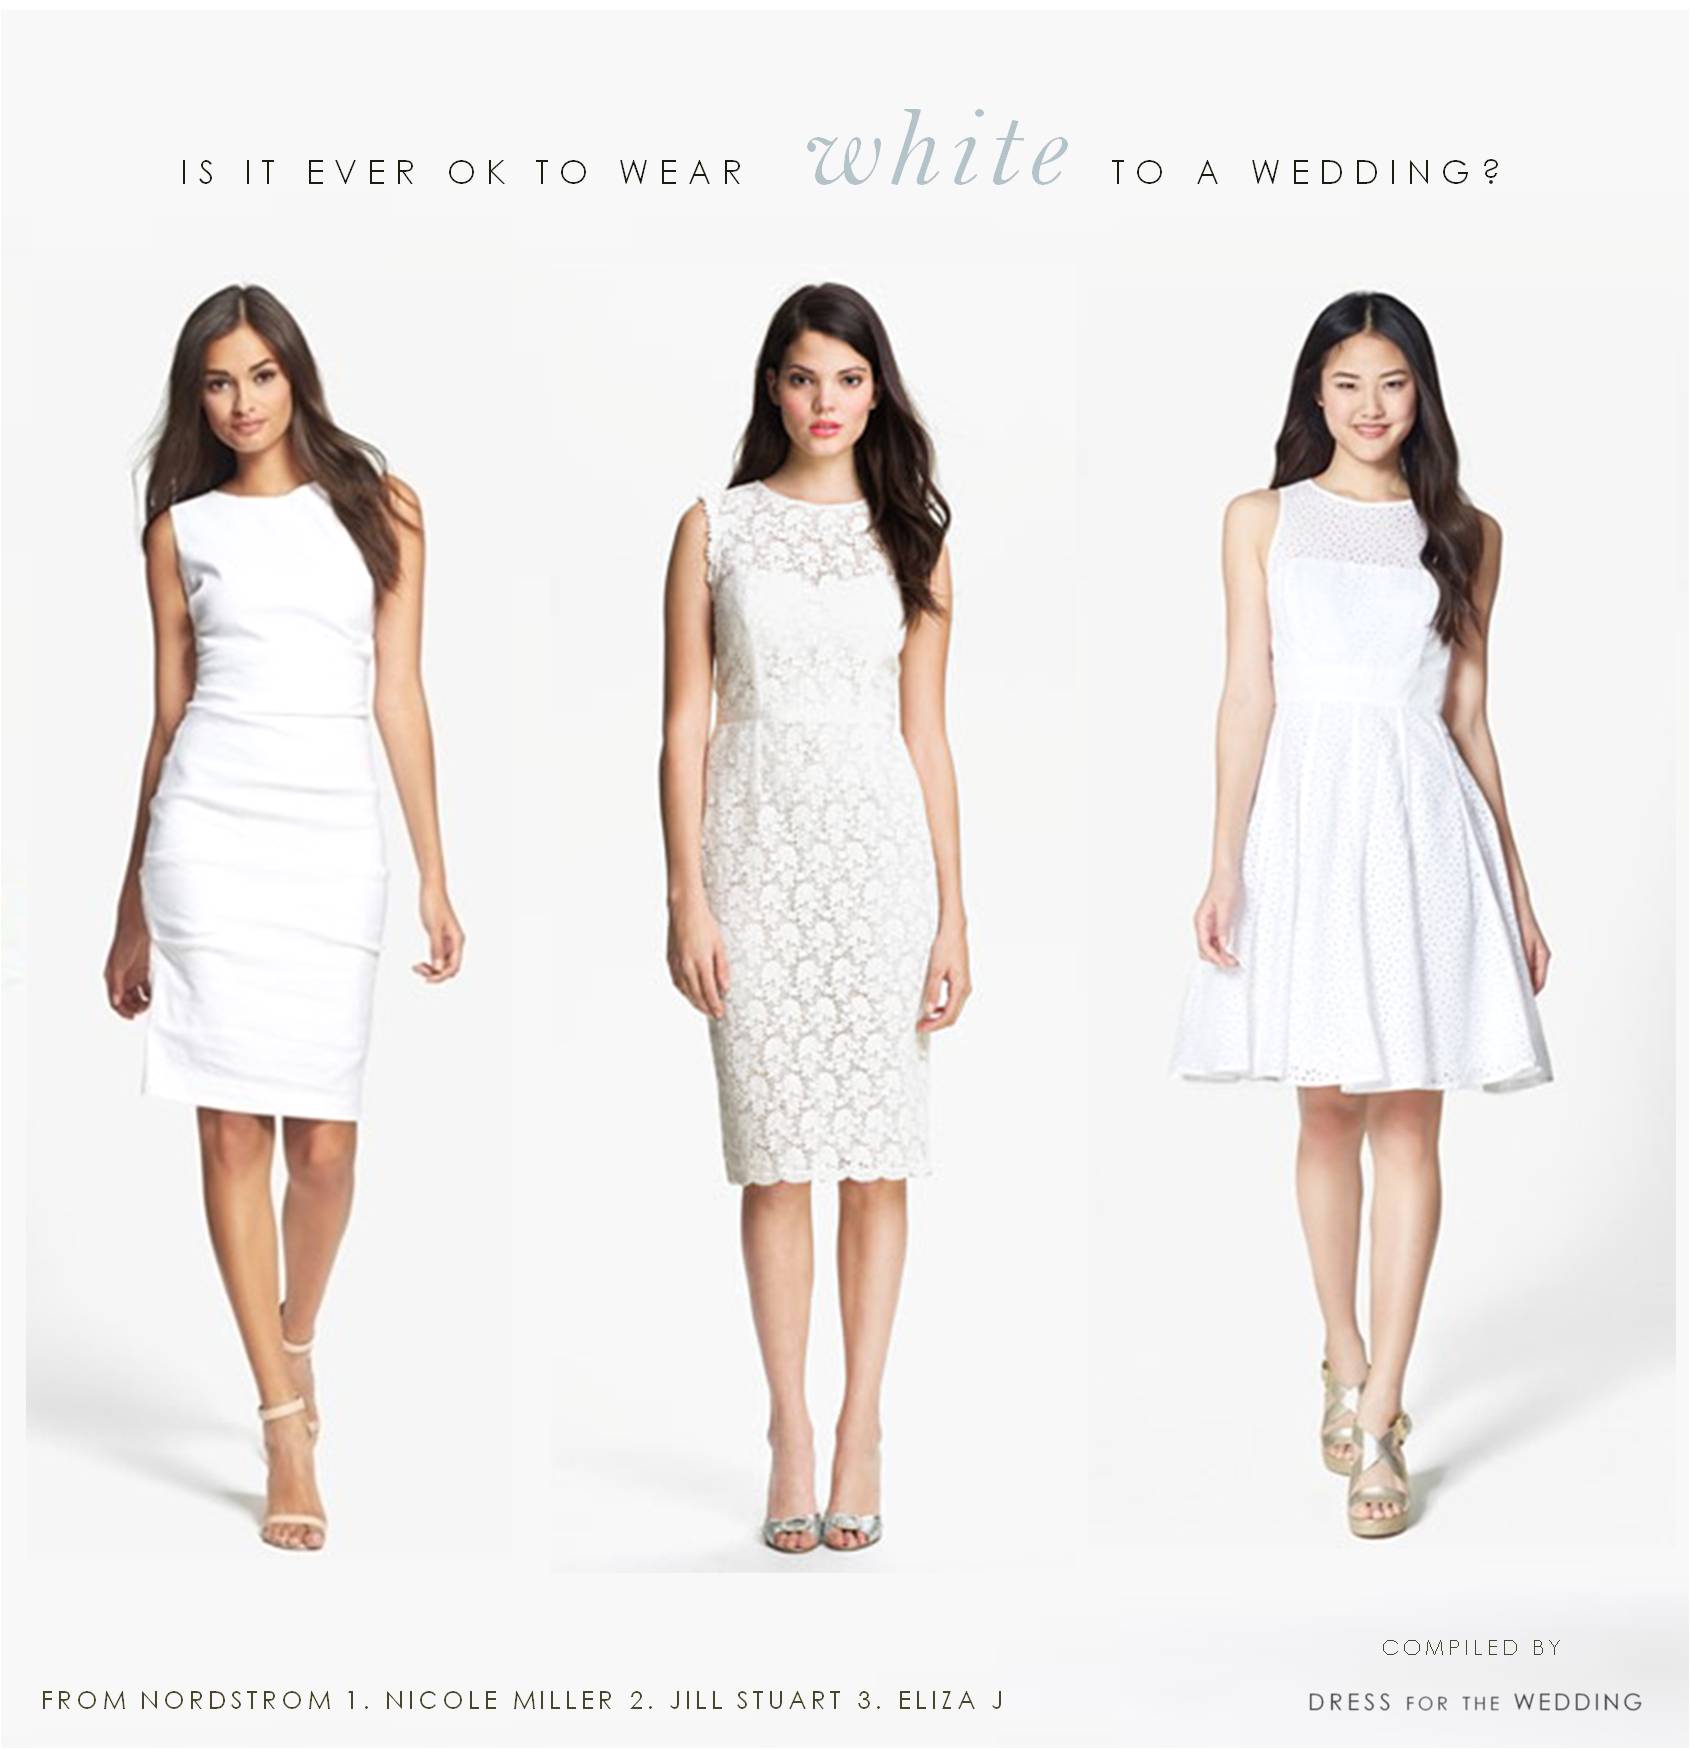 wear white to a wedding